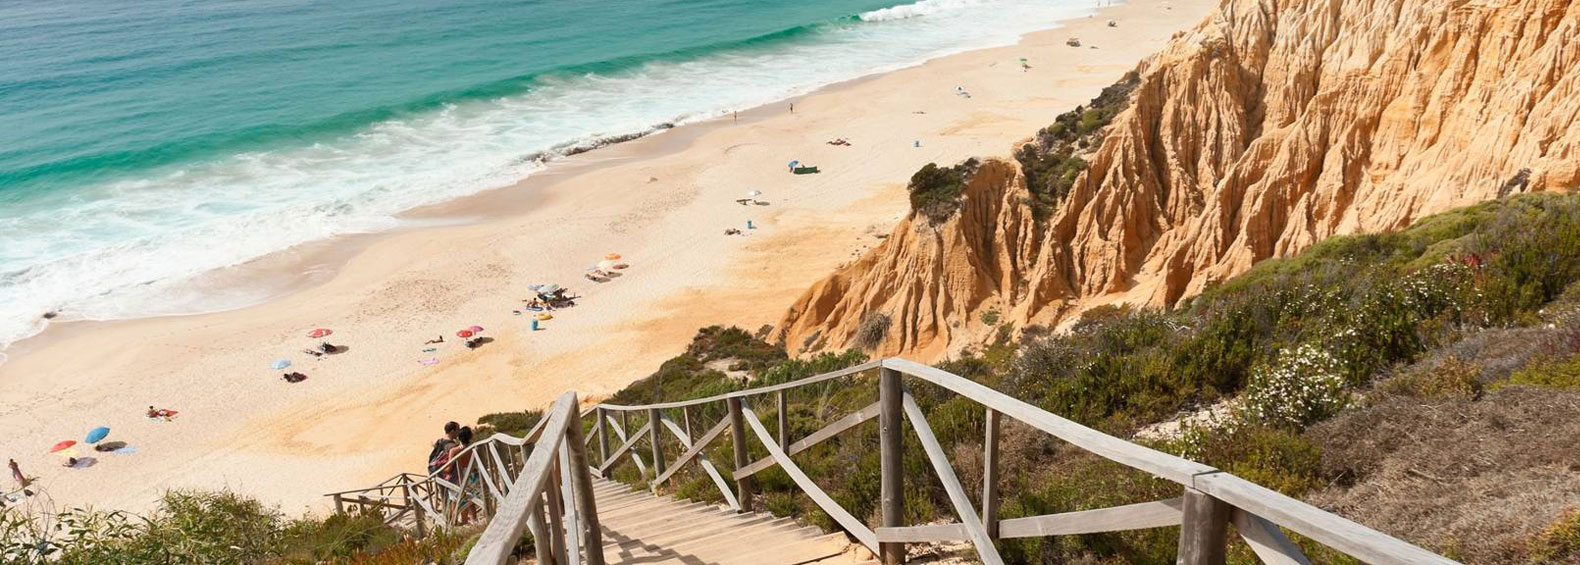 Comporta Portugal Villas - Beaches | Luxury Vacation Rentals